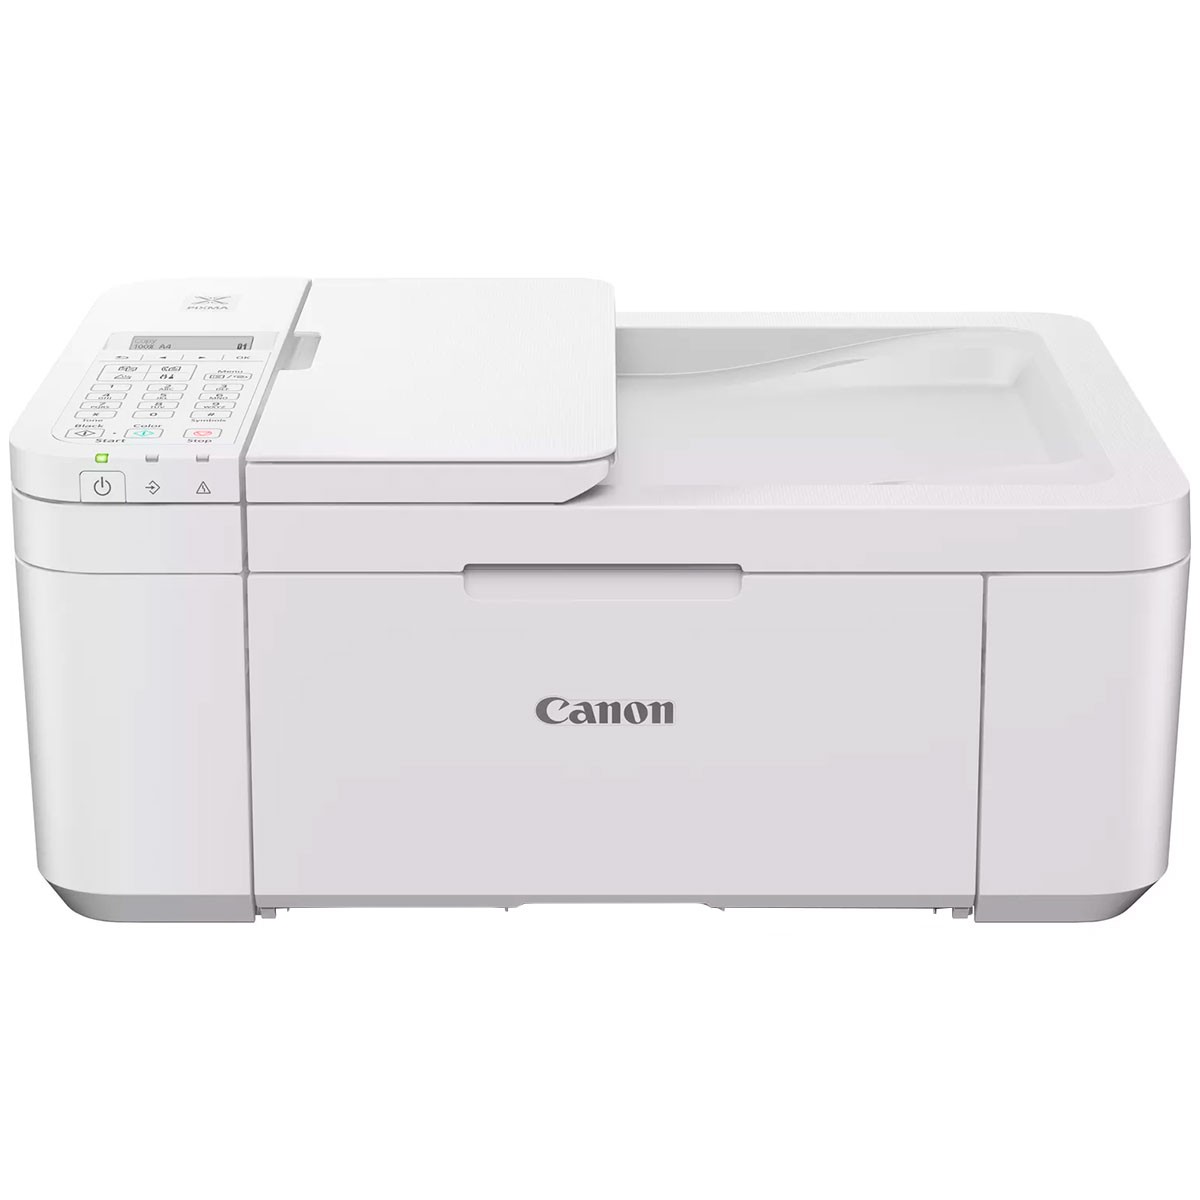 Impresora multifunción CANON Pixma MG3650S - 0515C109 (WiFi